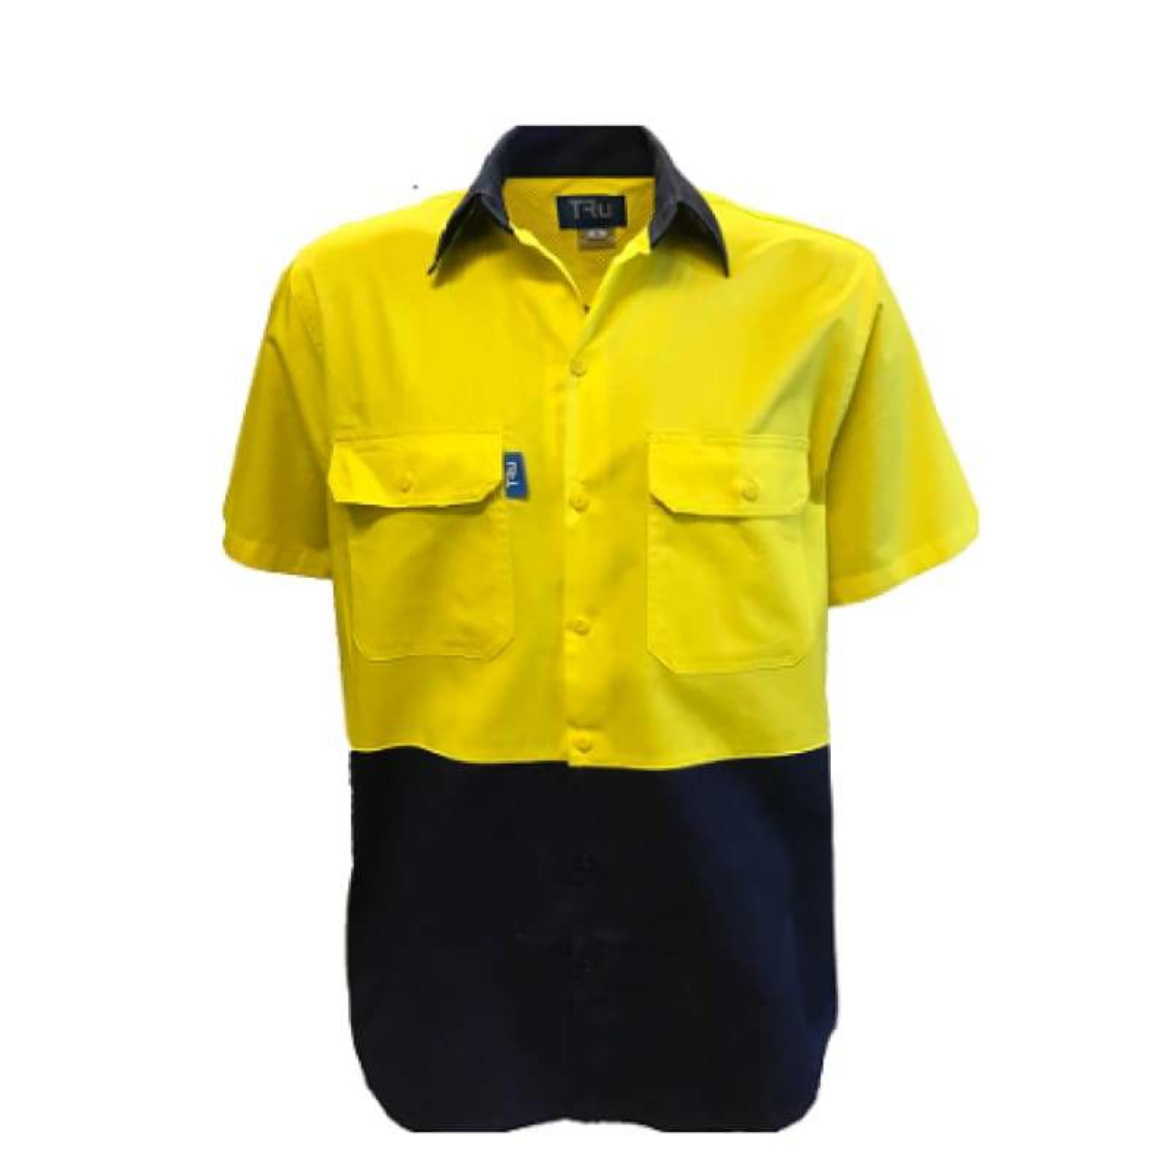 Picture of Tru Workwear, Shirt, Short Sleeve, Light Cotton Drill, Vent